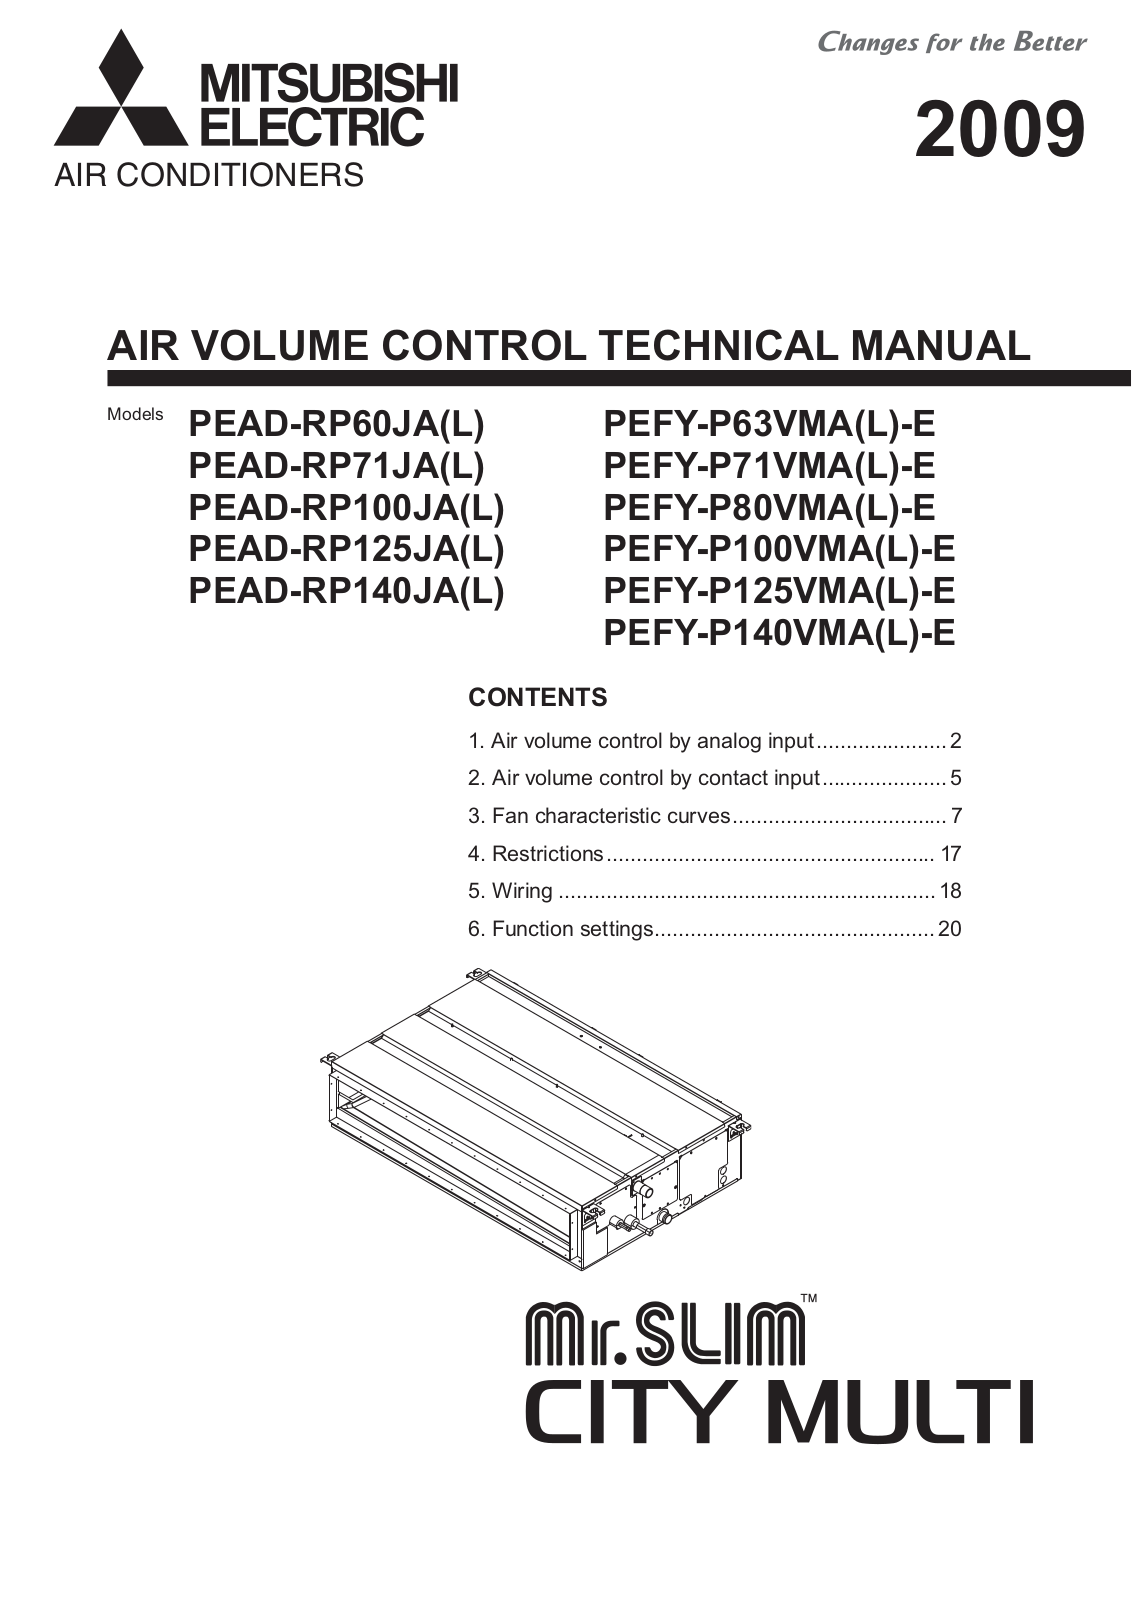 Mitsubishi AIR VOLUME CONTROL, PEAD-RP60JA(L), PEAD-RP71JA(L), PEAD-RP100JA(L), PEAD-RP125JA(L) Technical Guide